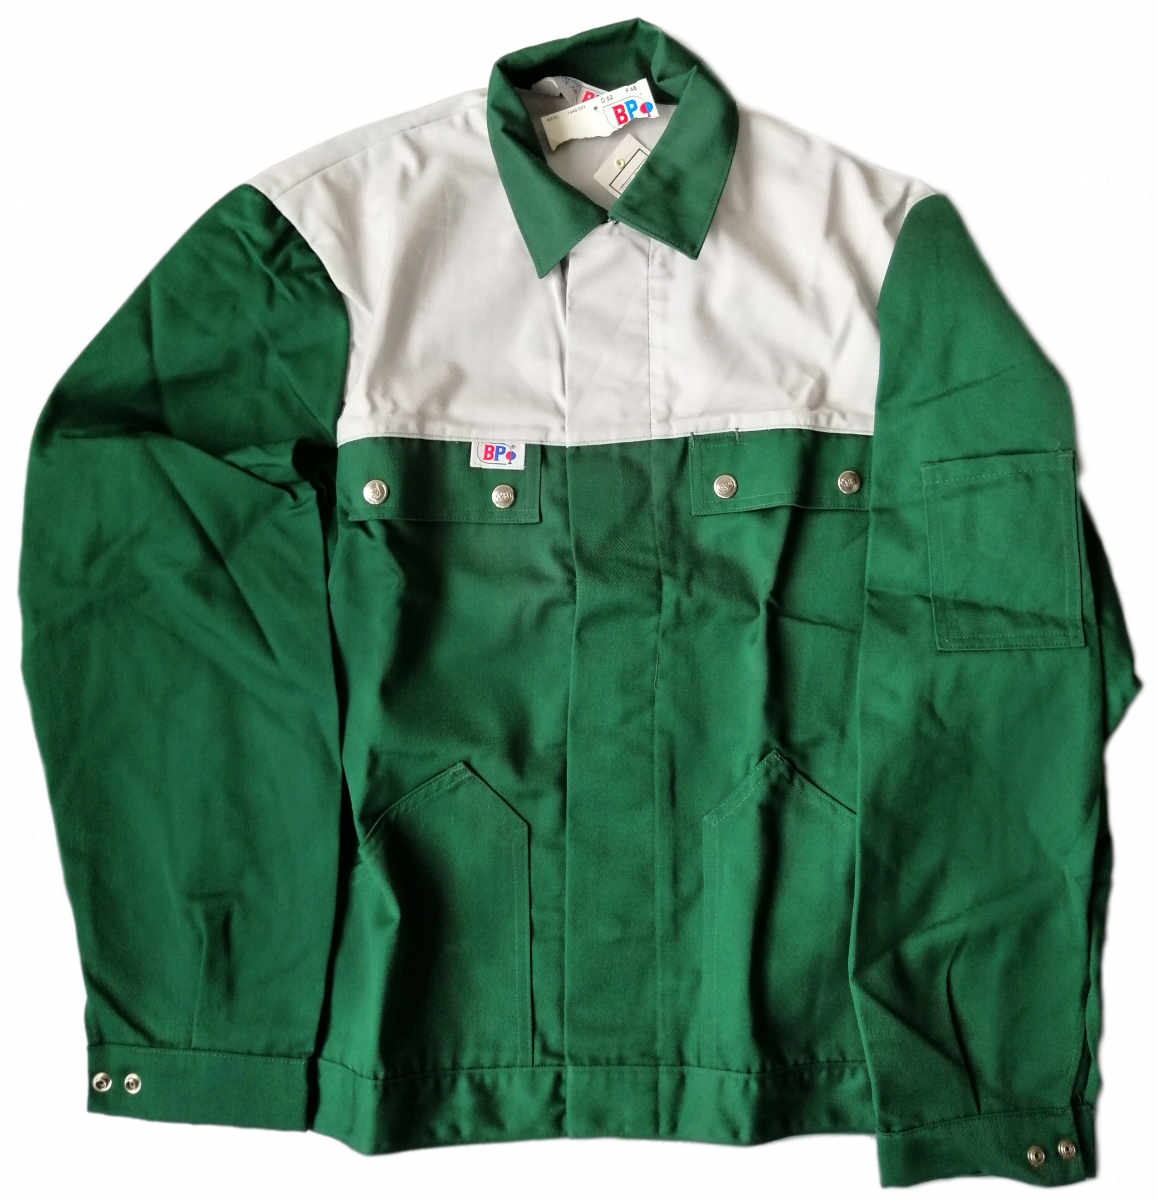 BP Blouson Jacke Arbeitsjacke Bundjacke Berufsjacke Arbeitskleidung Berufskleidung grau grün